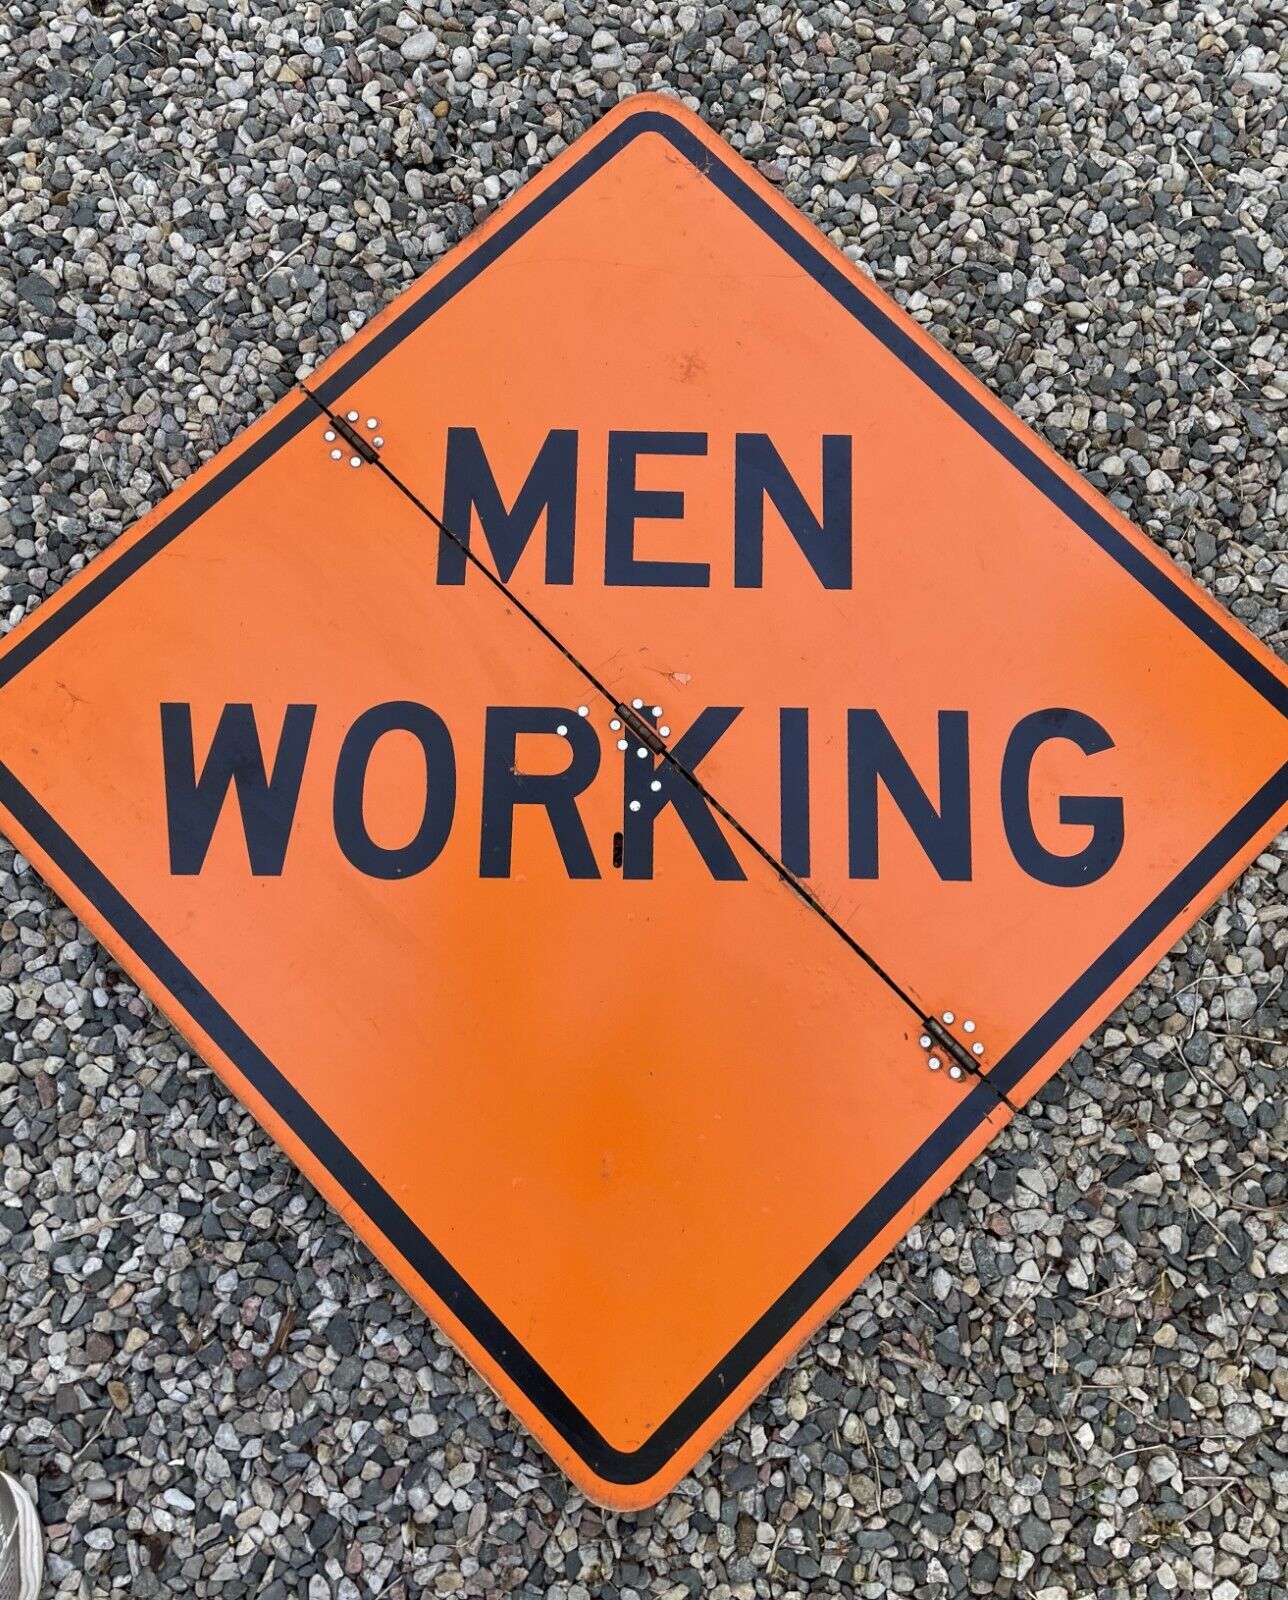 Men Working Road Construction Sign – Orange - 36” x 36” – Vintage Original